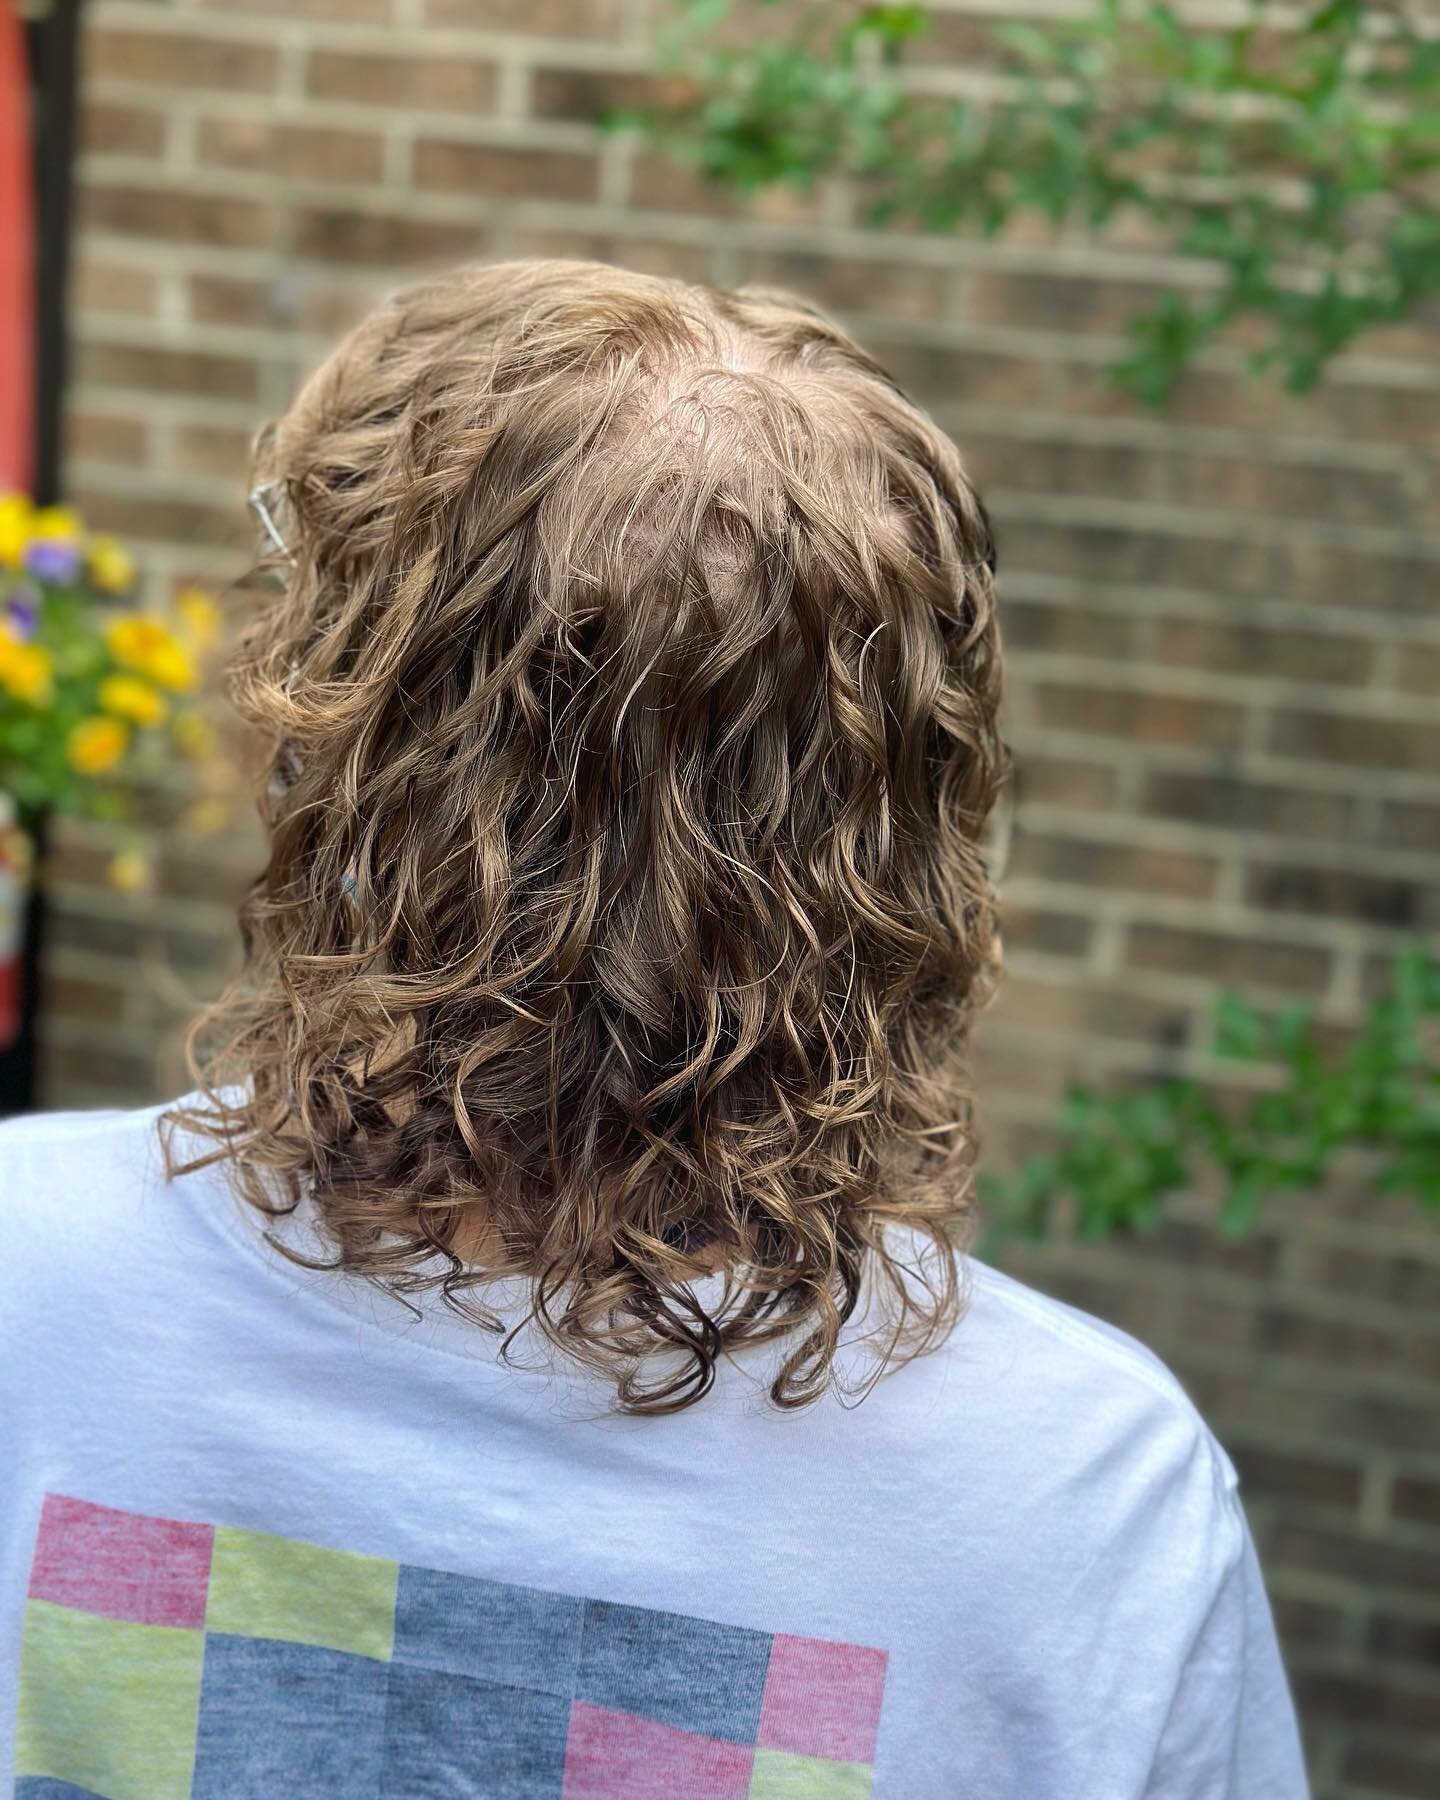 Embrace your curls, they are apart of you! 

#curls #cutlyhair #curlyhairsalon #chapelhill chapelhillsalon #urbanfringe #urbanfringesalon #lovewhatyoudo #devacut #devacurl